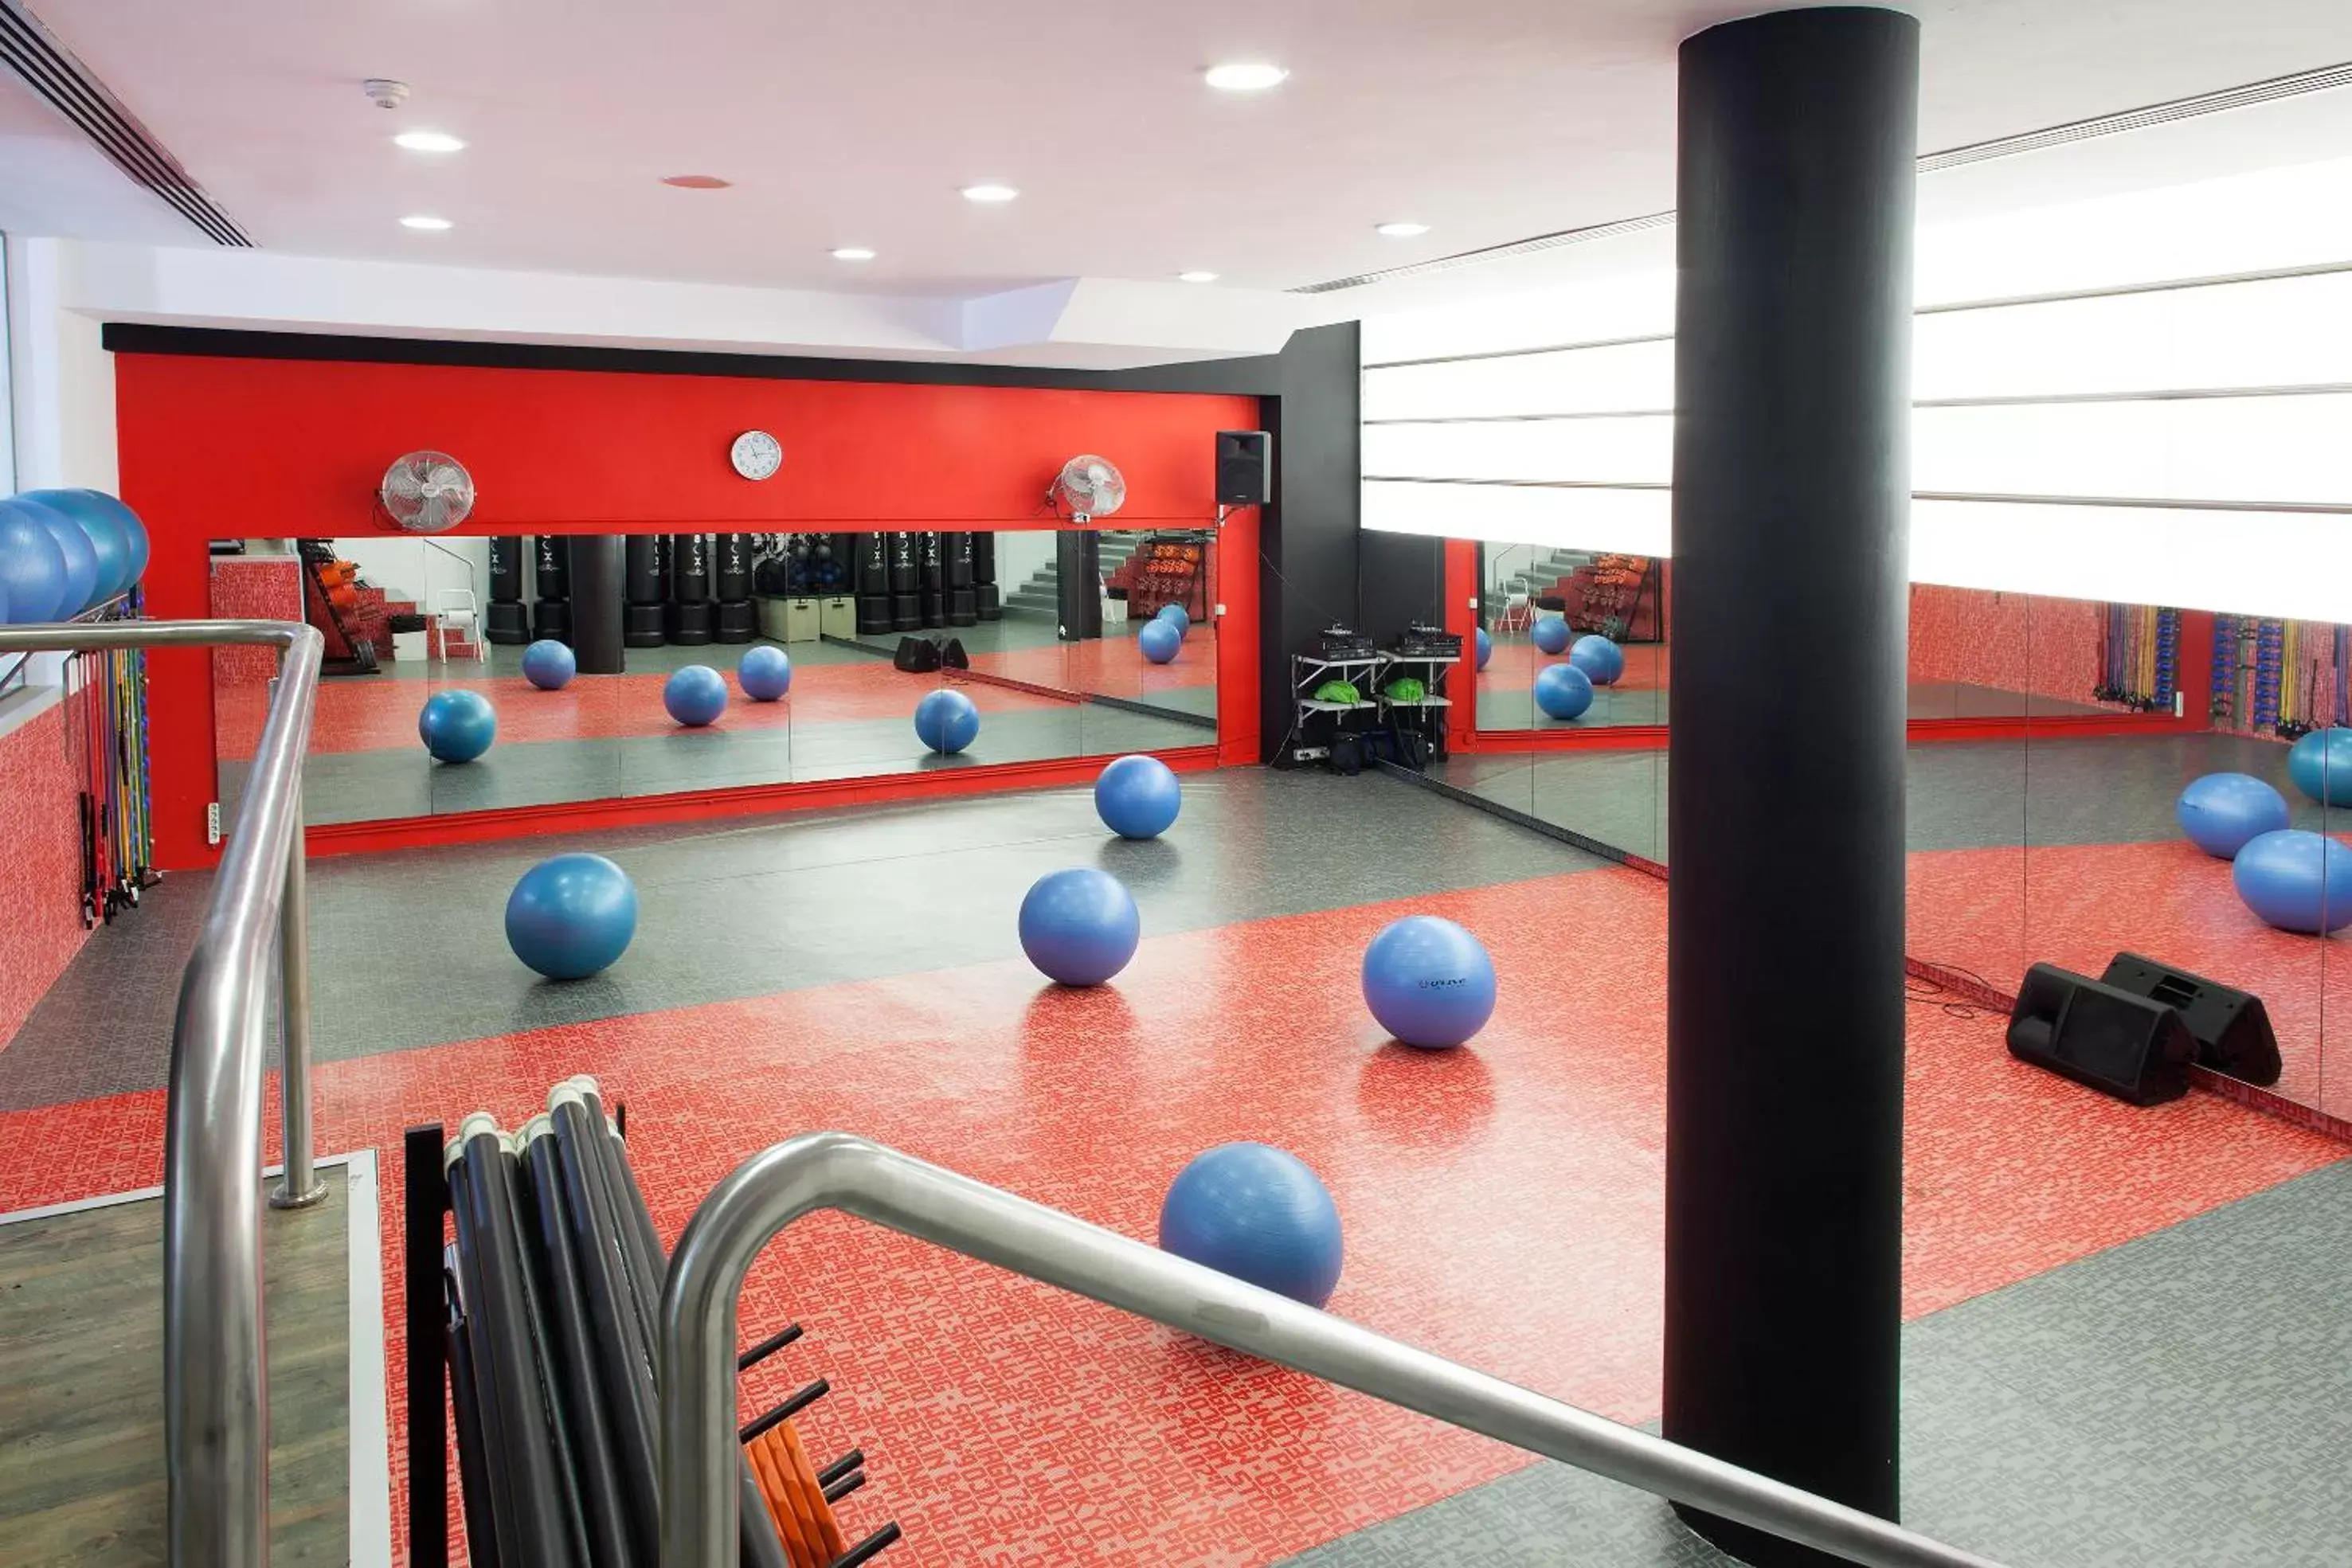 Fitness centre/facilities in Port Fiesta Park